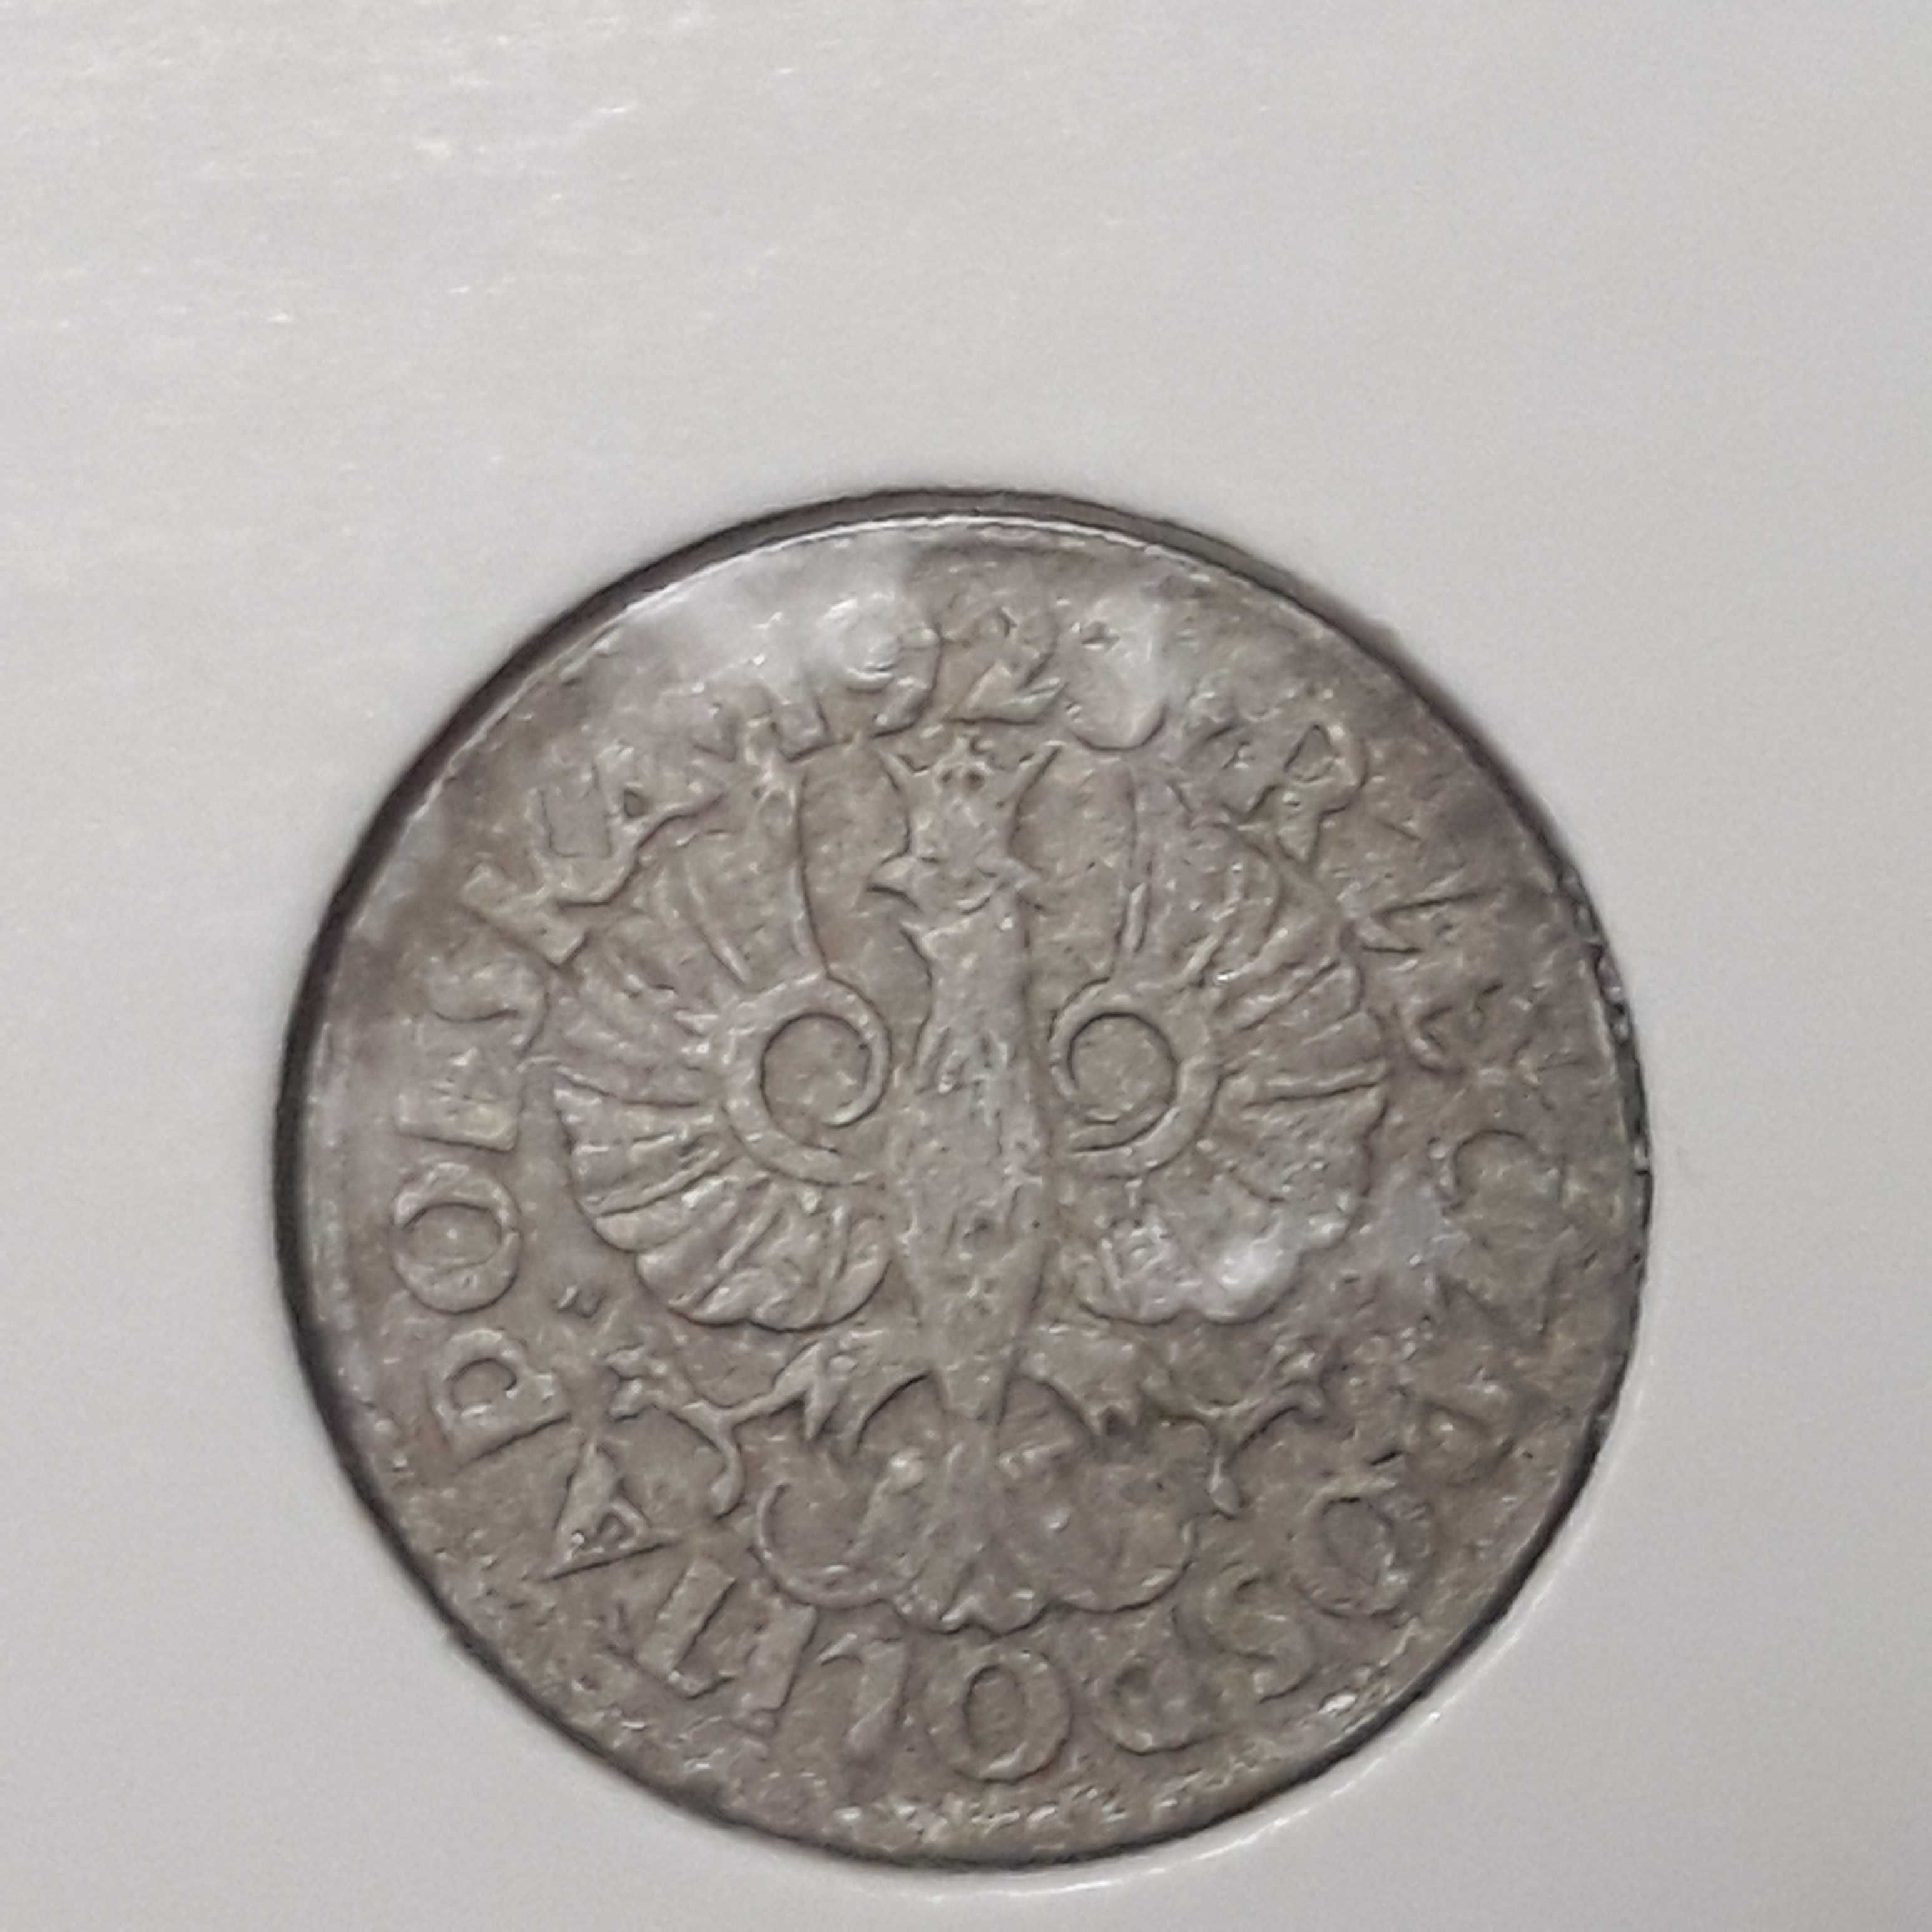 Moneta 10 groszy 1923 2RP